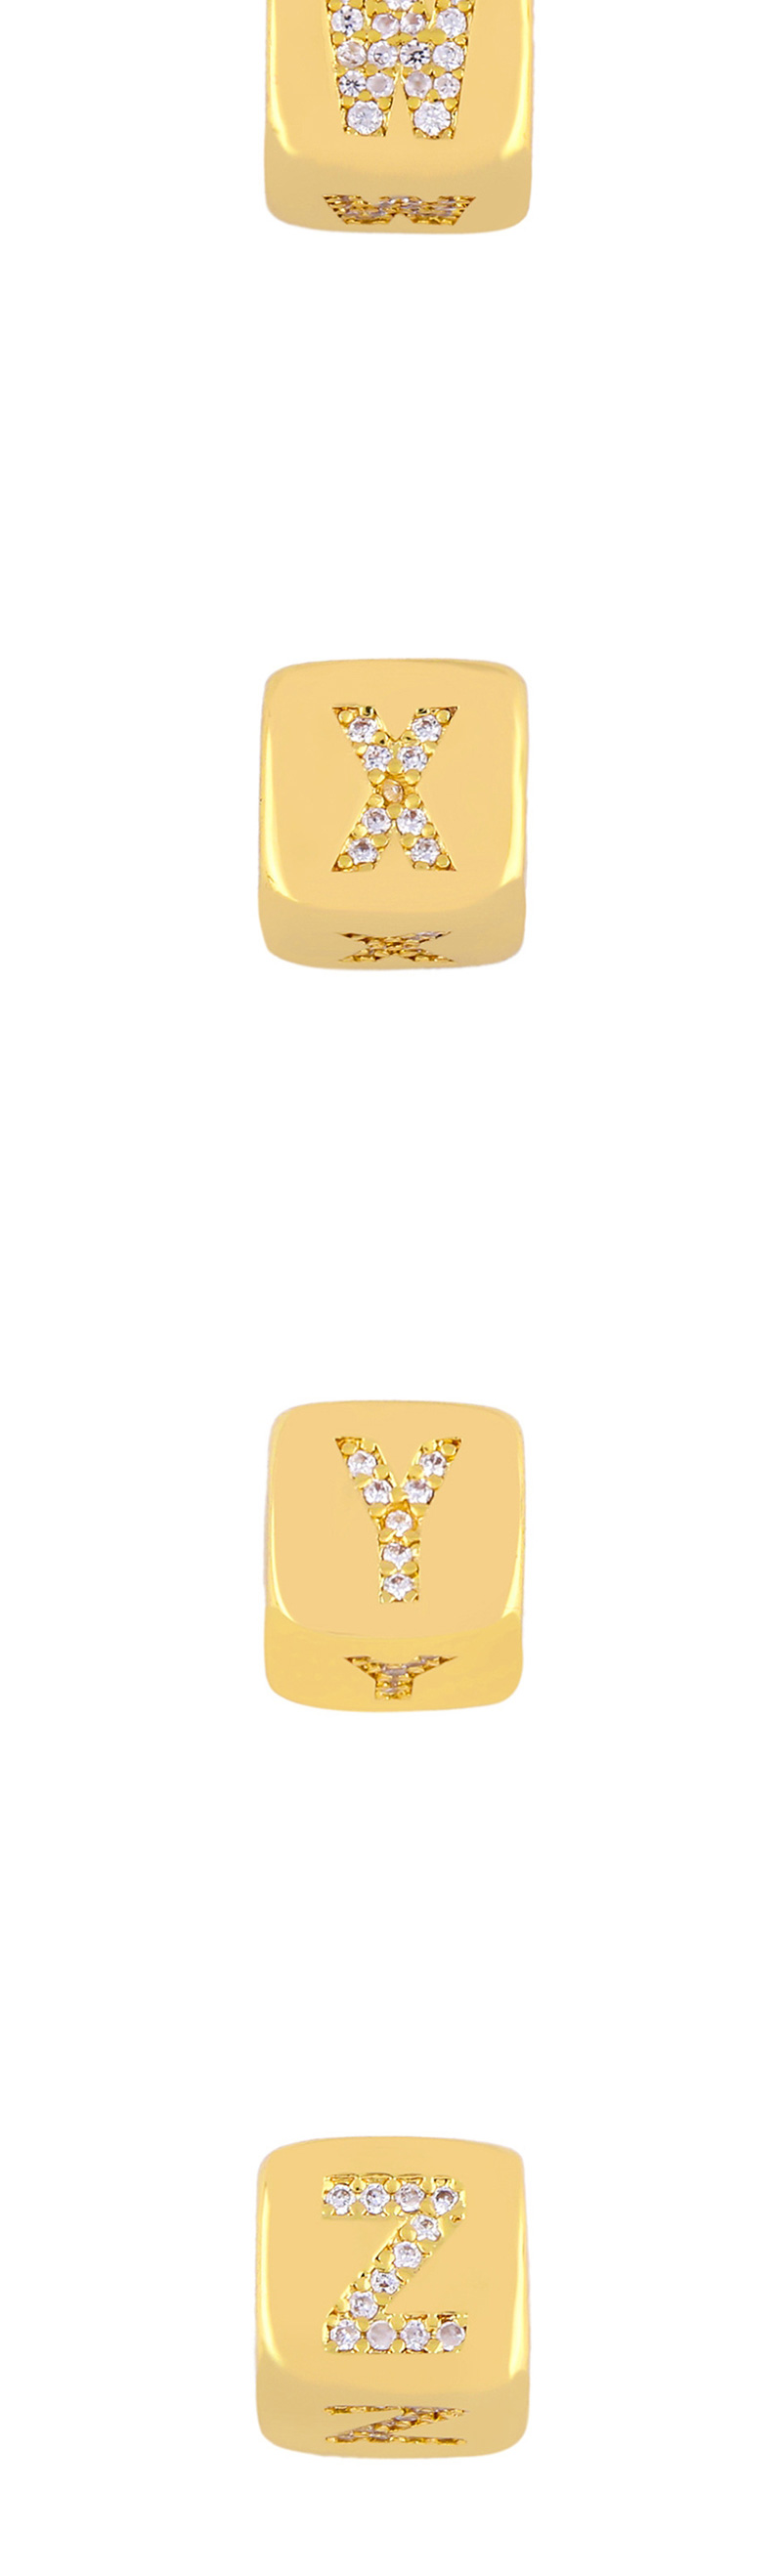 Fashion Golden P Diamond Sieve Diy Bracelet,Jewelry Findings & Components